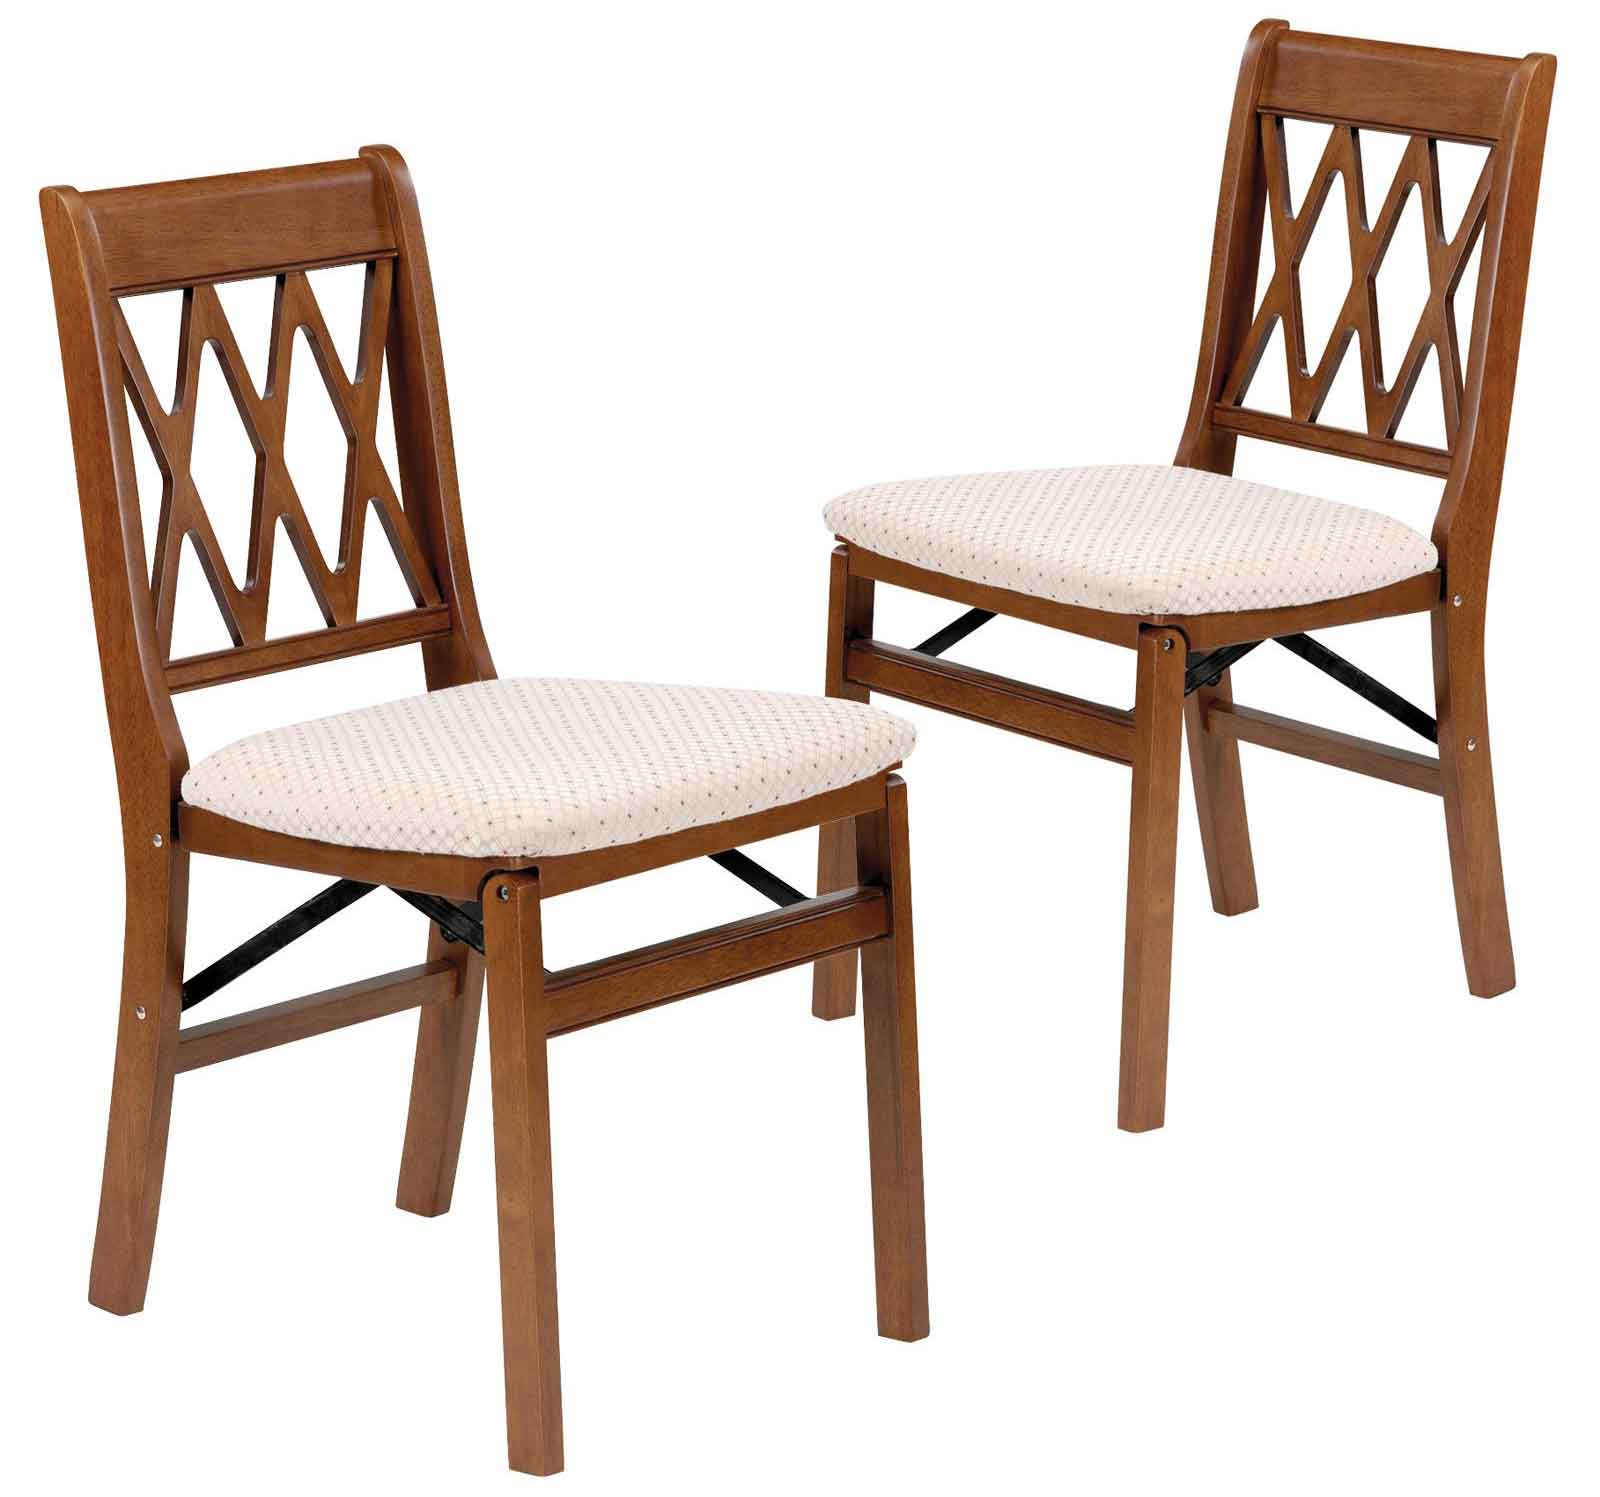 Wooden chairs furniture designs.  An Interior Design